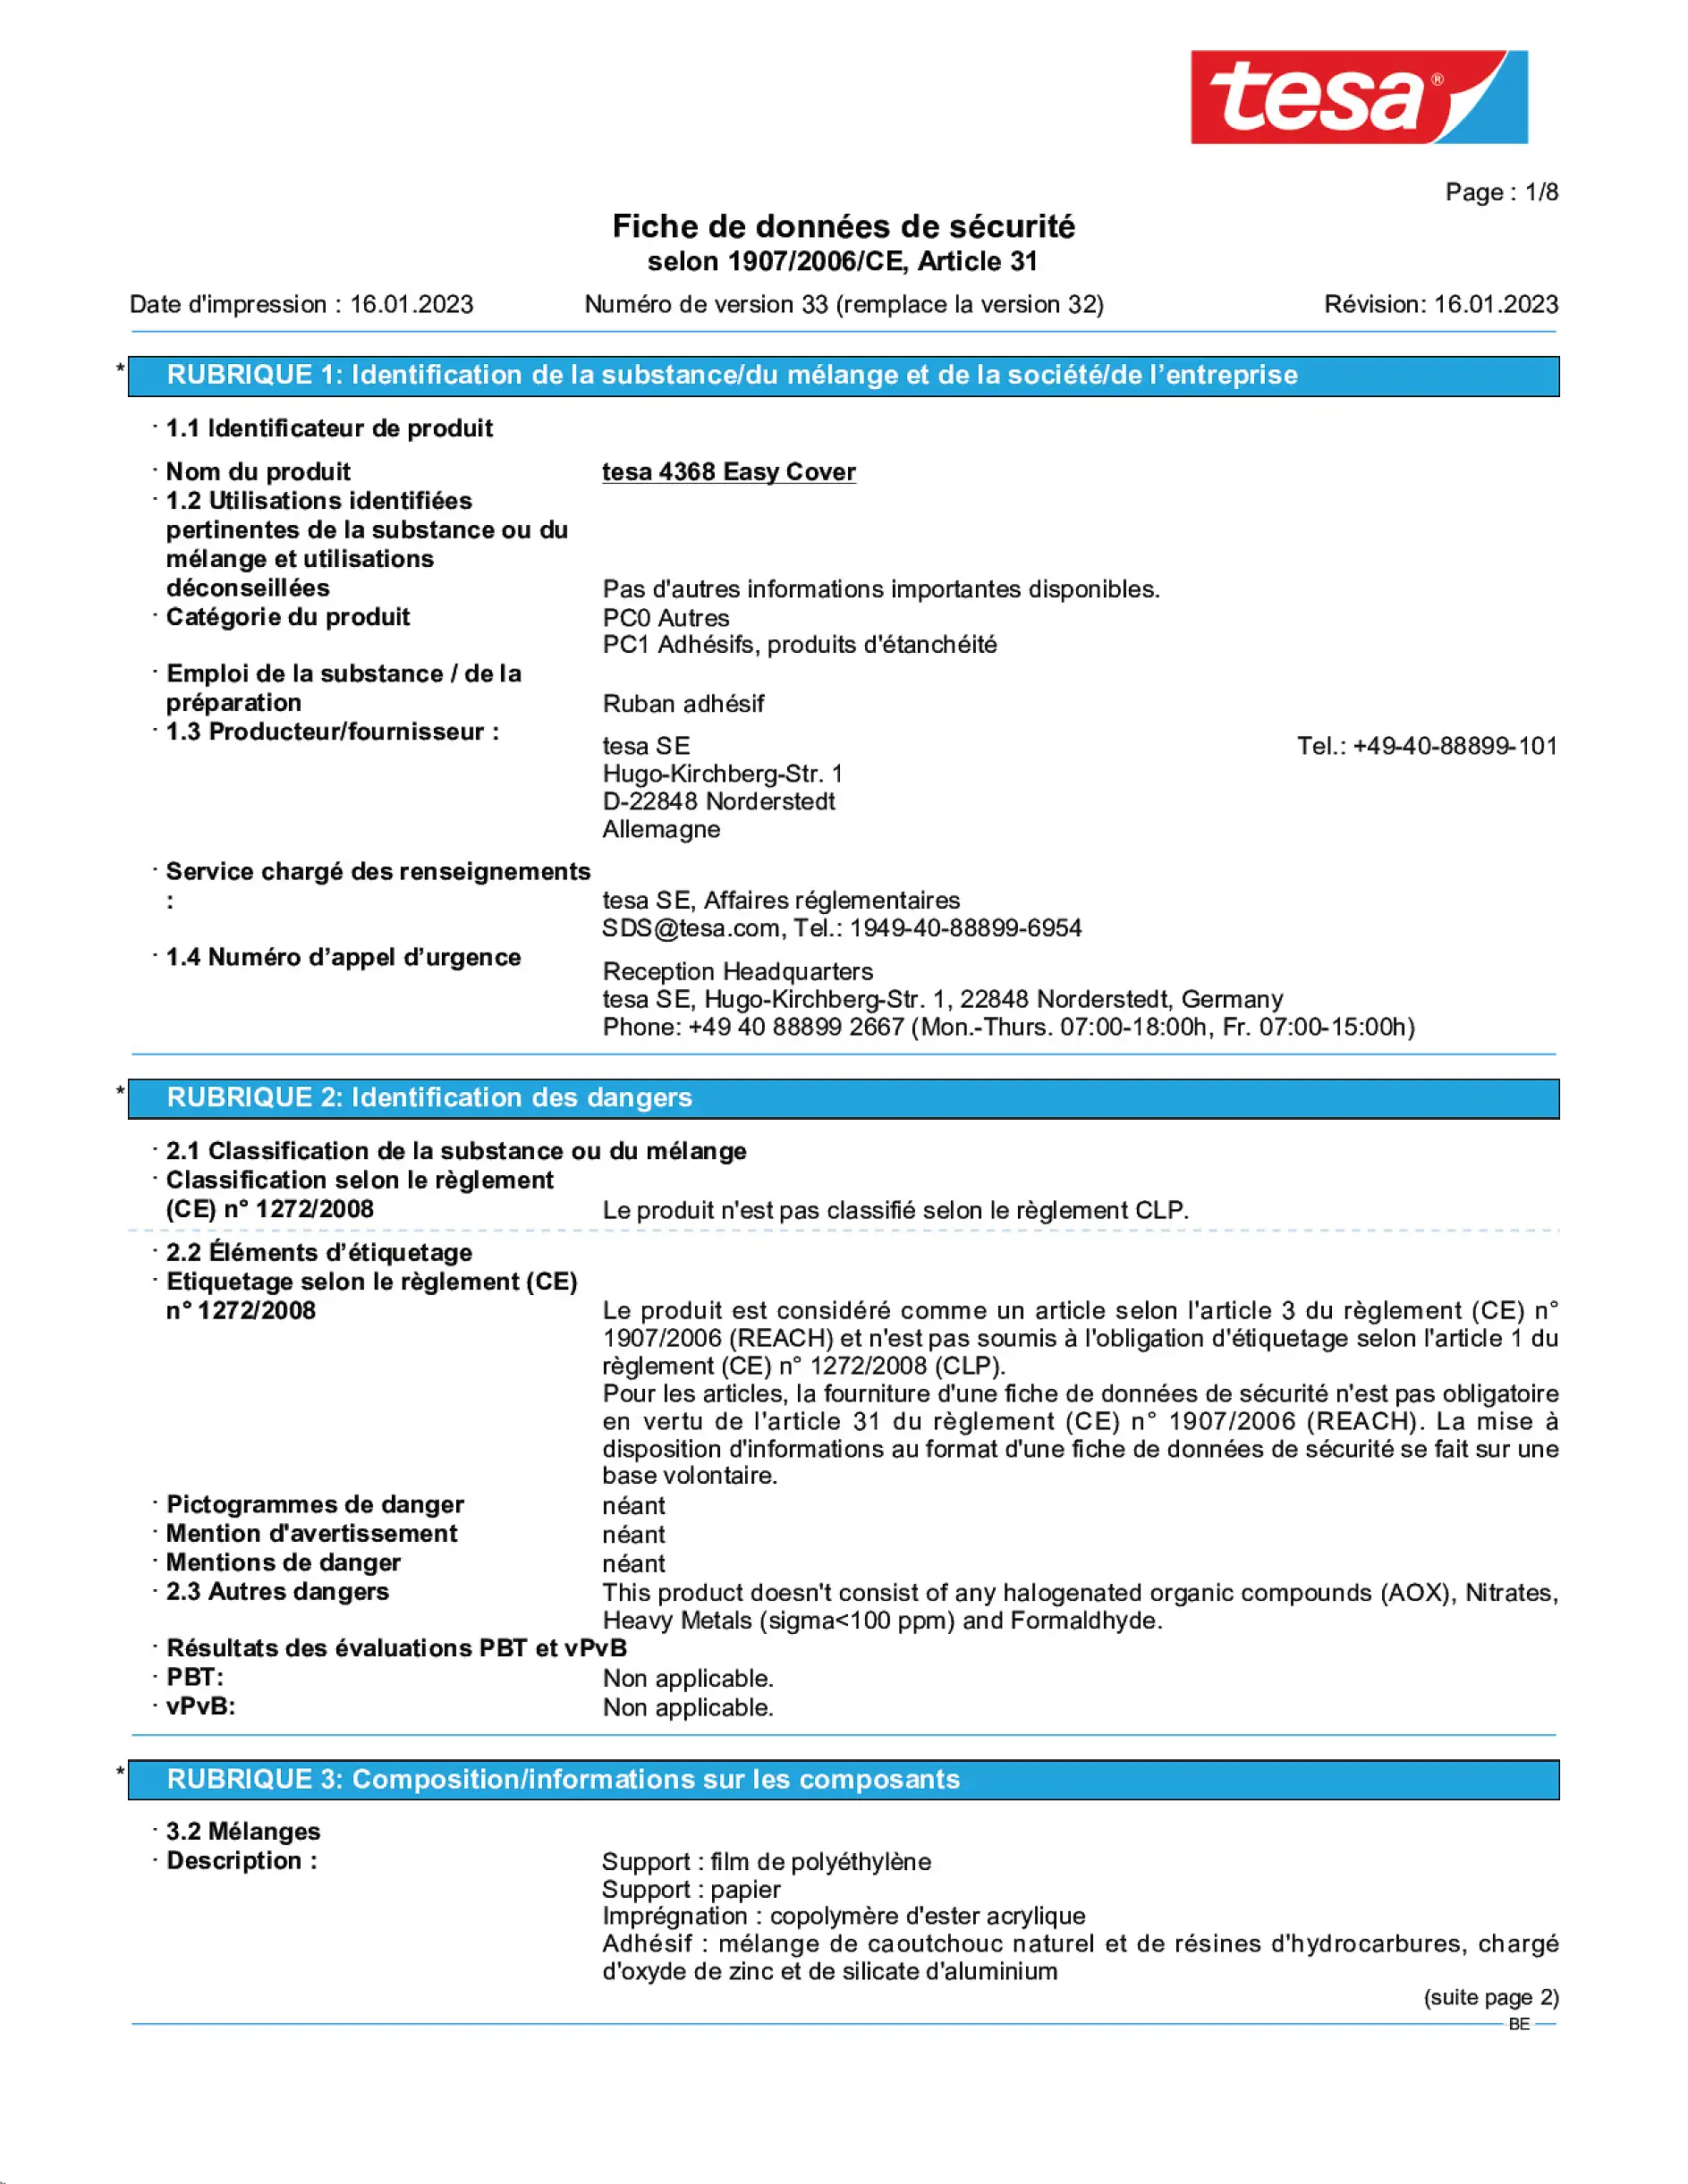 Safety data sheet_tesa® Professional 04368_nl-BE_v33